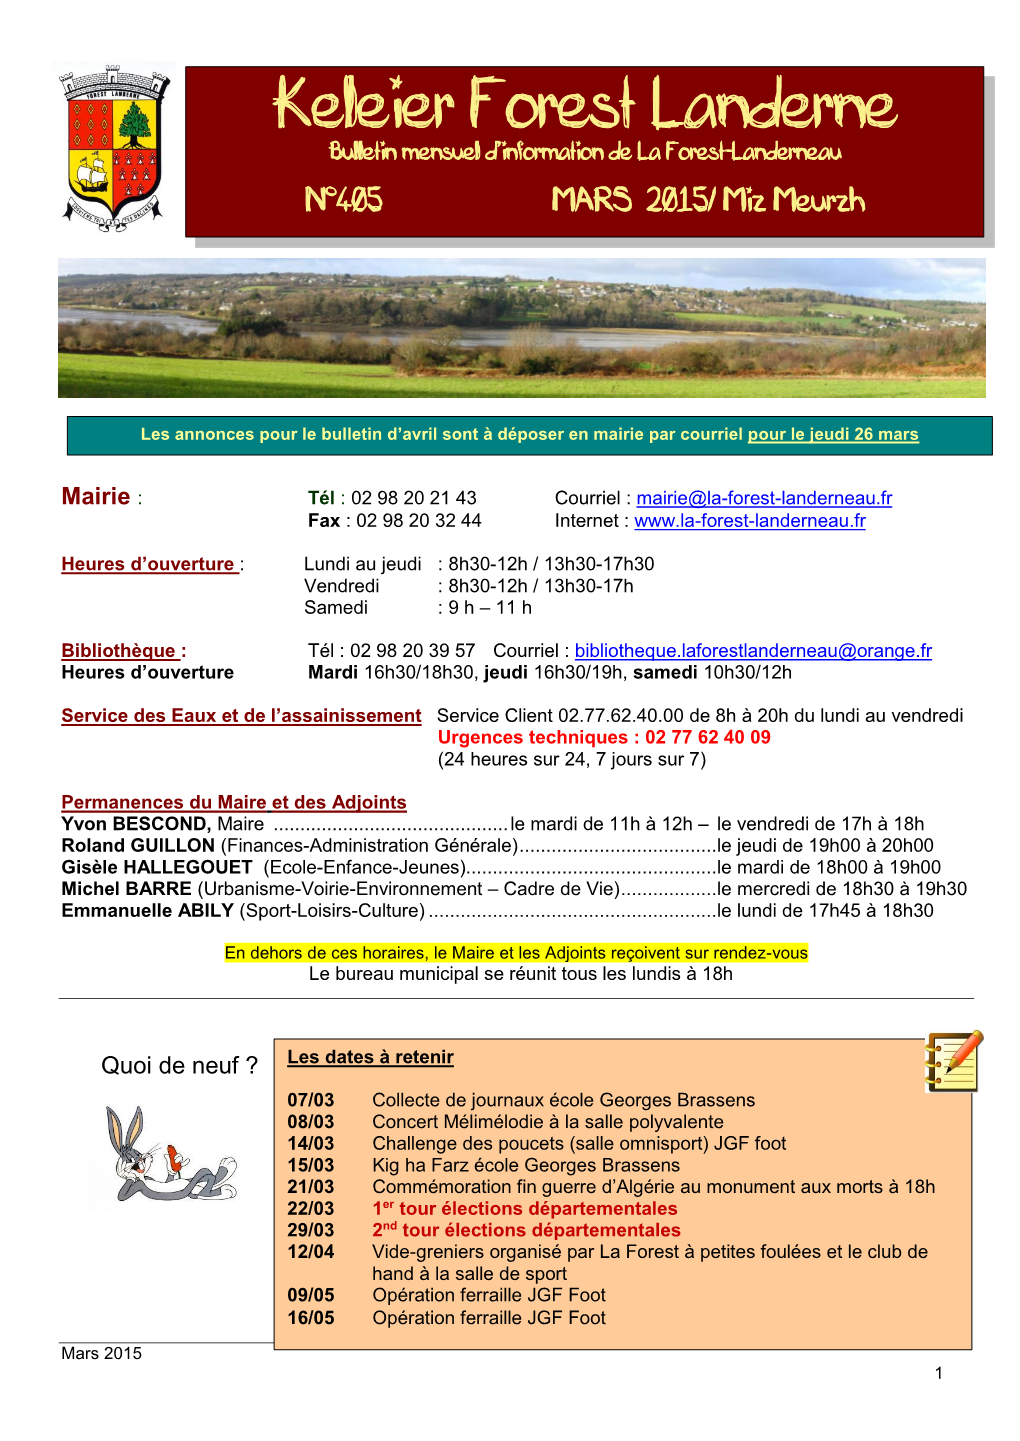 Keleier Forest Landerne Bulletin Mensuel D’Information De La Forest-Landerneau